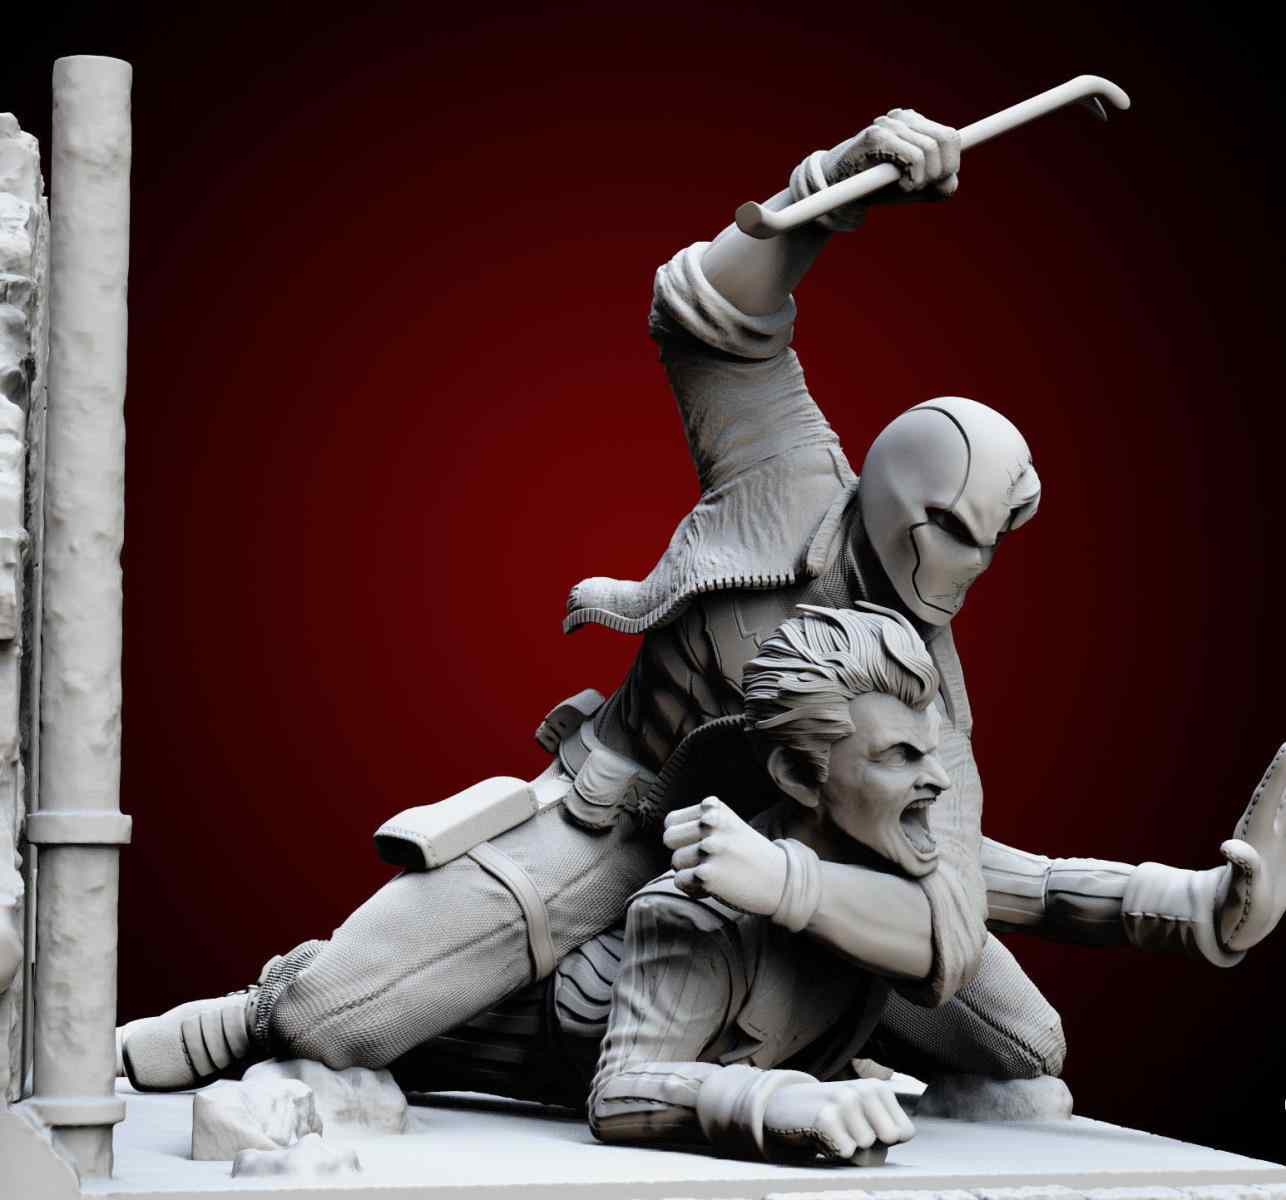 Batman Ninja vs Joker Dragon 3D Printing Figurines in Diorama | Assembly